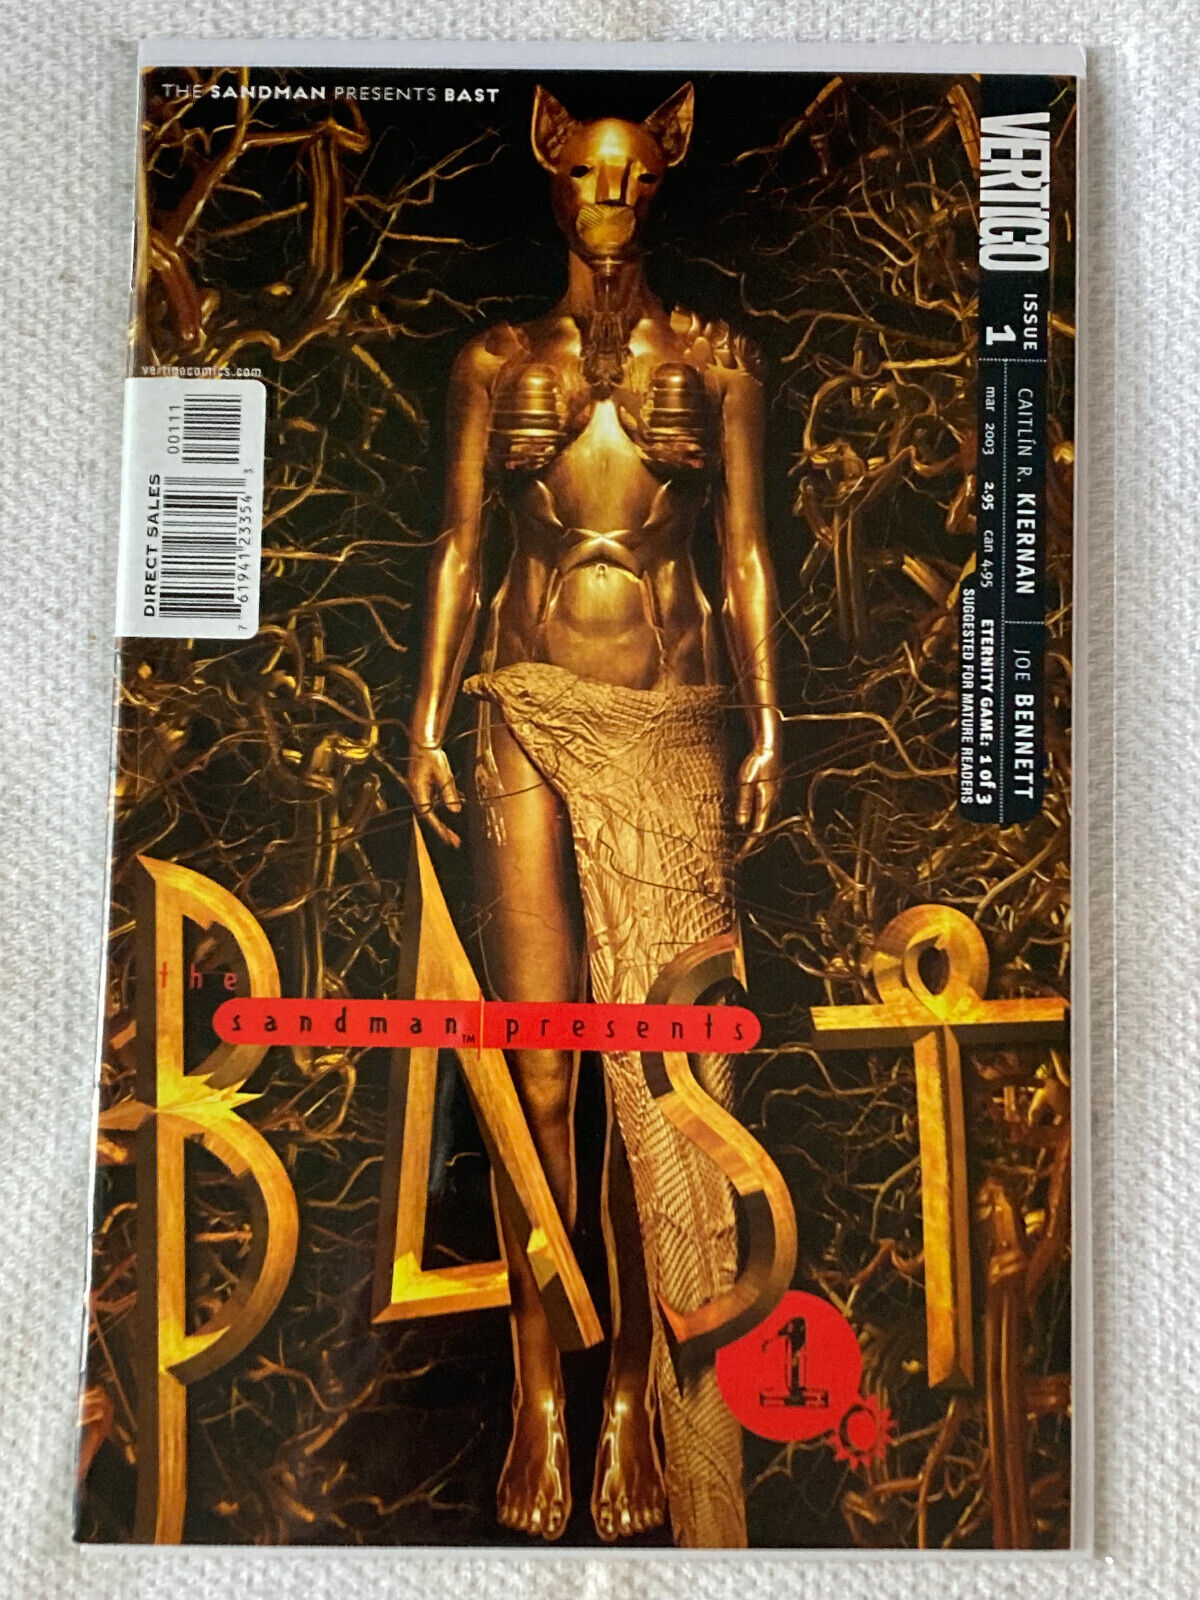 Sandman Presents Bast #1 2003 VF+/NM Vertigo Comics